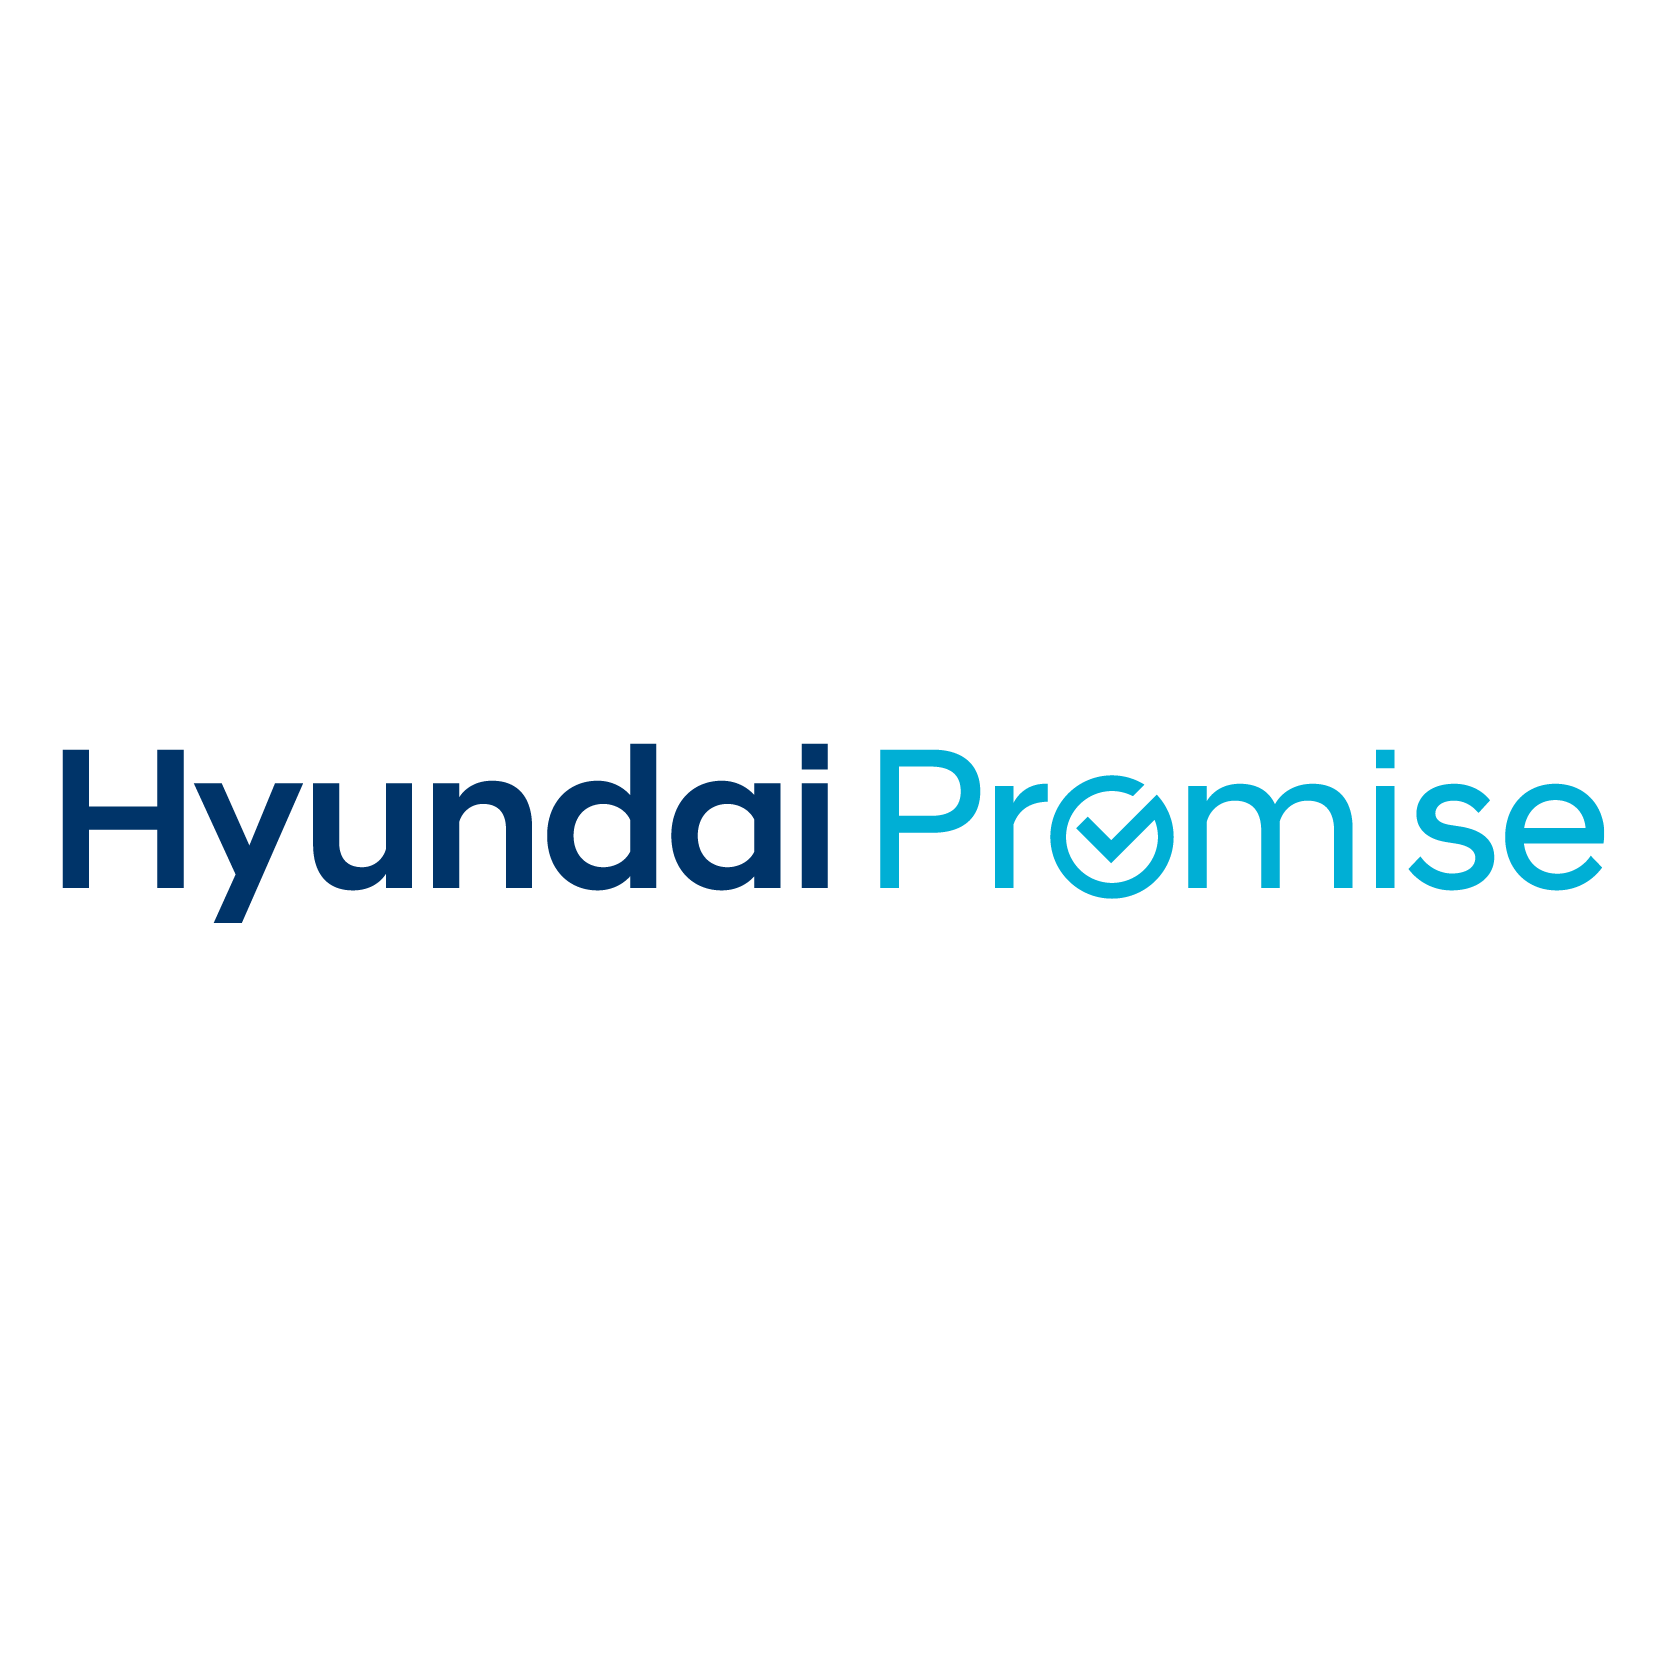 Hyundai Promises